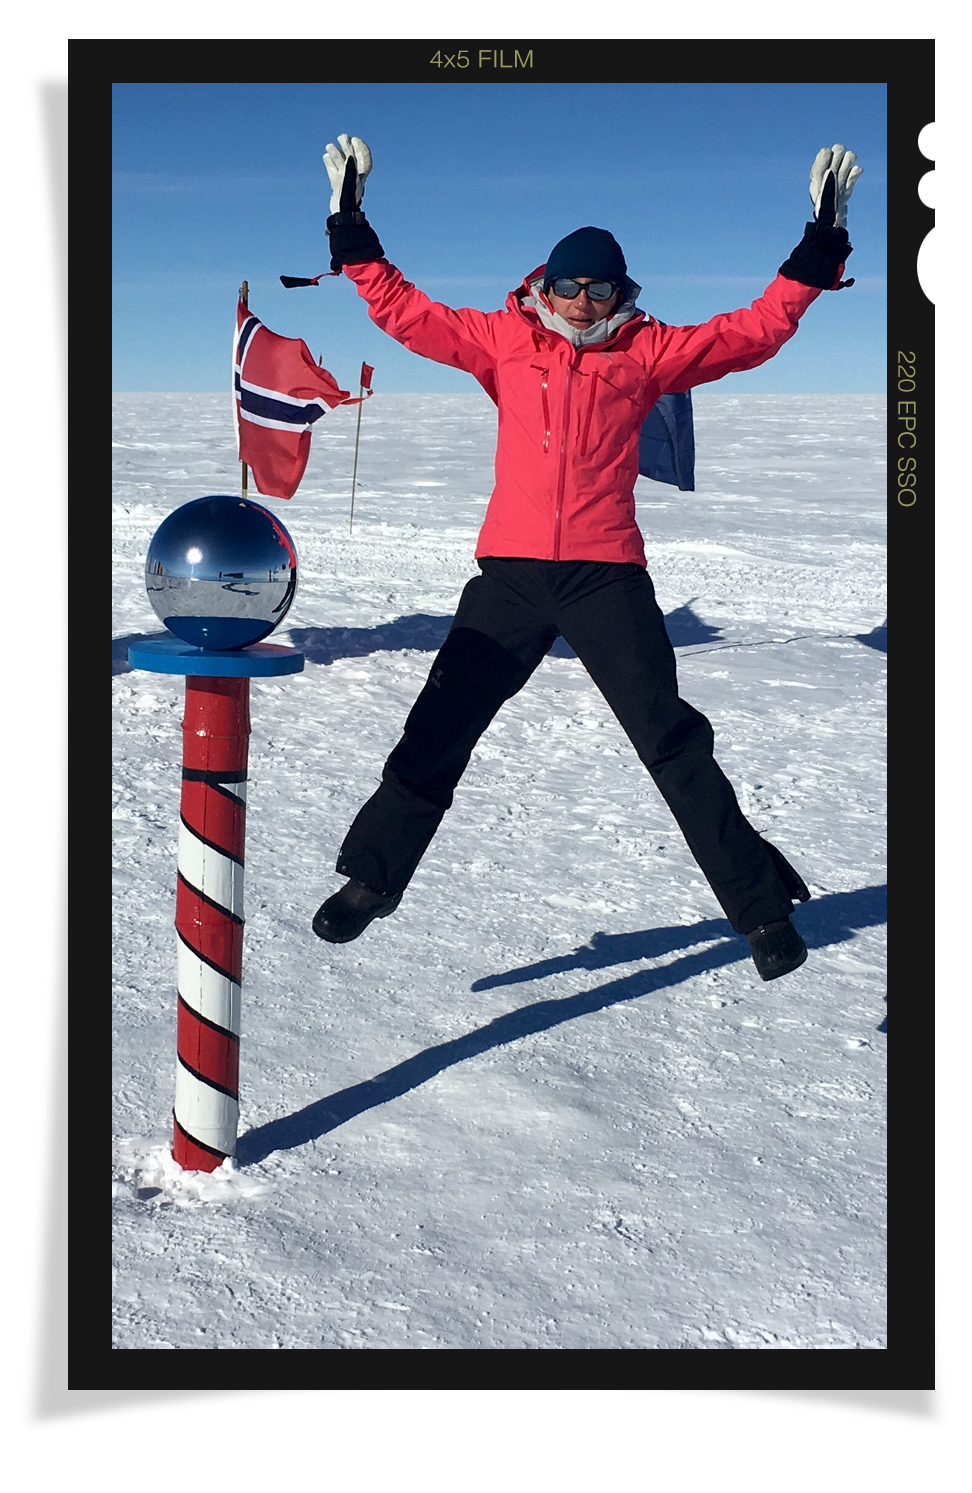 Gordon at the South Pole.